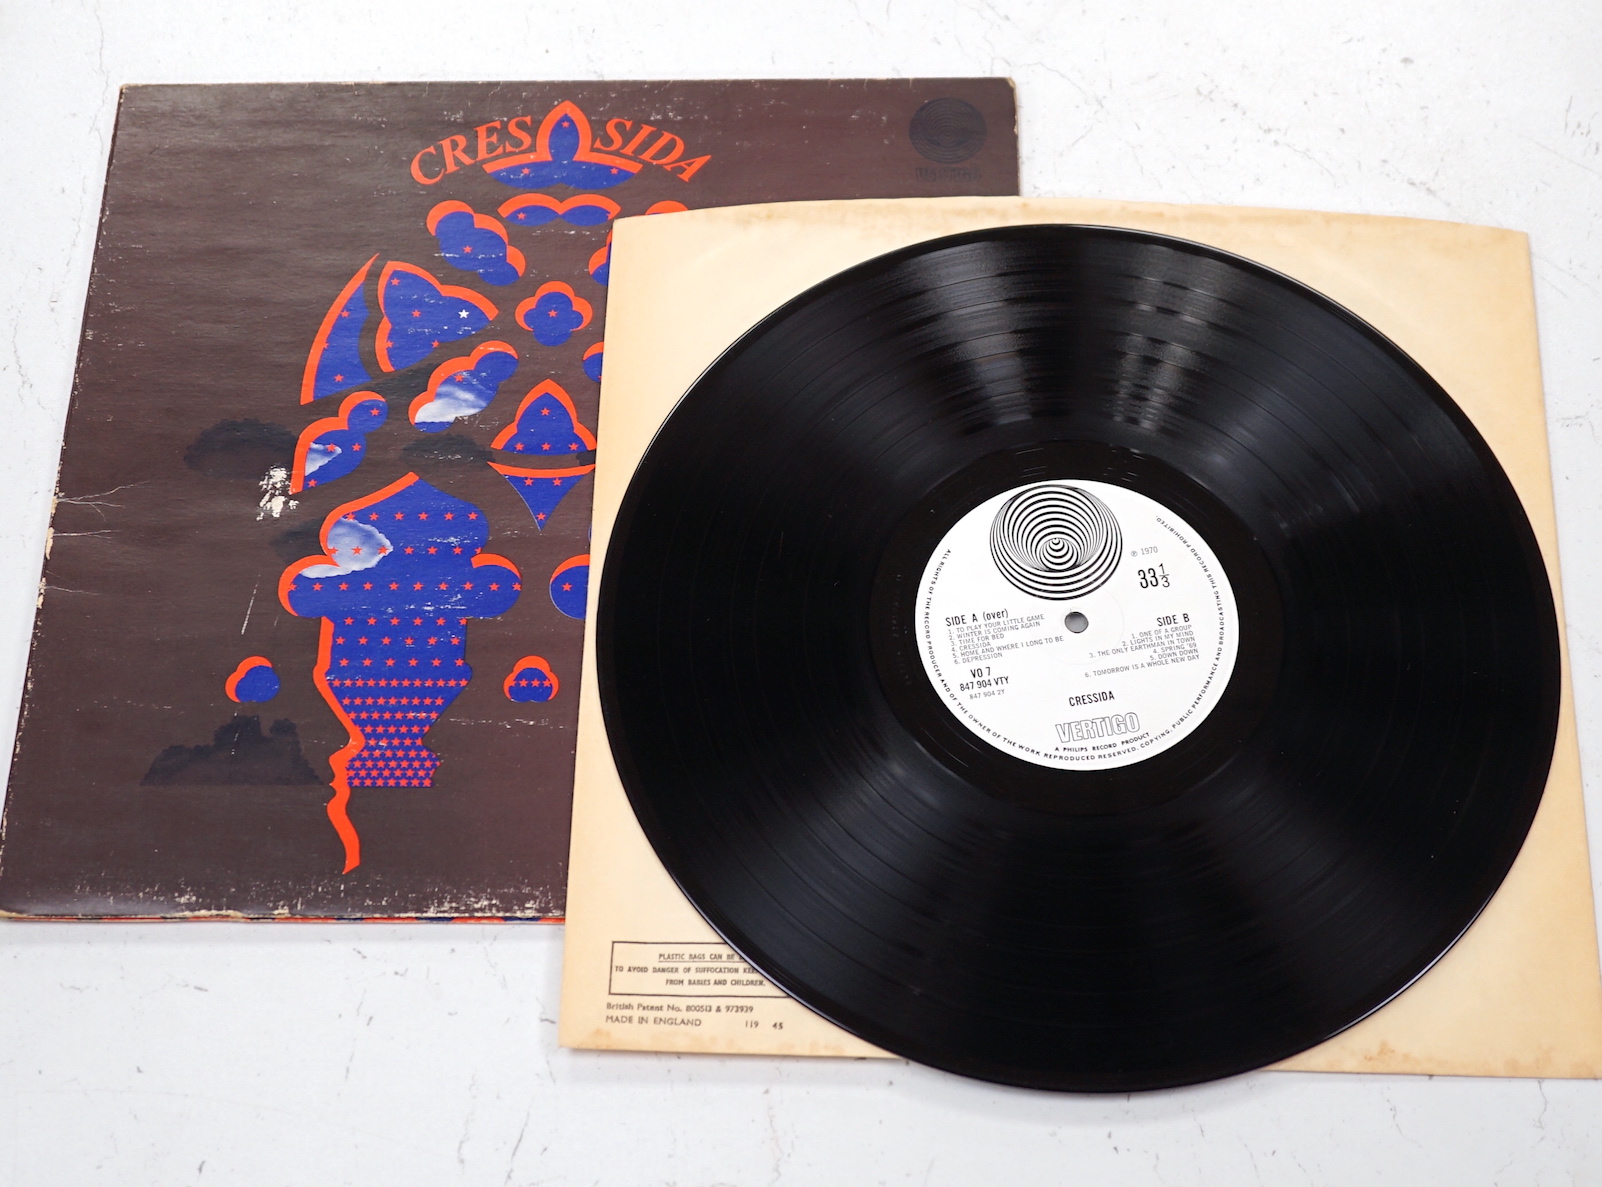 Cressida LP record album, Cressida, on Vertigo large swirl label, VO 7, in gatefold sleeve with